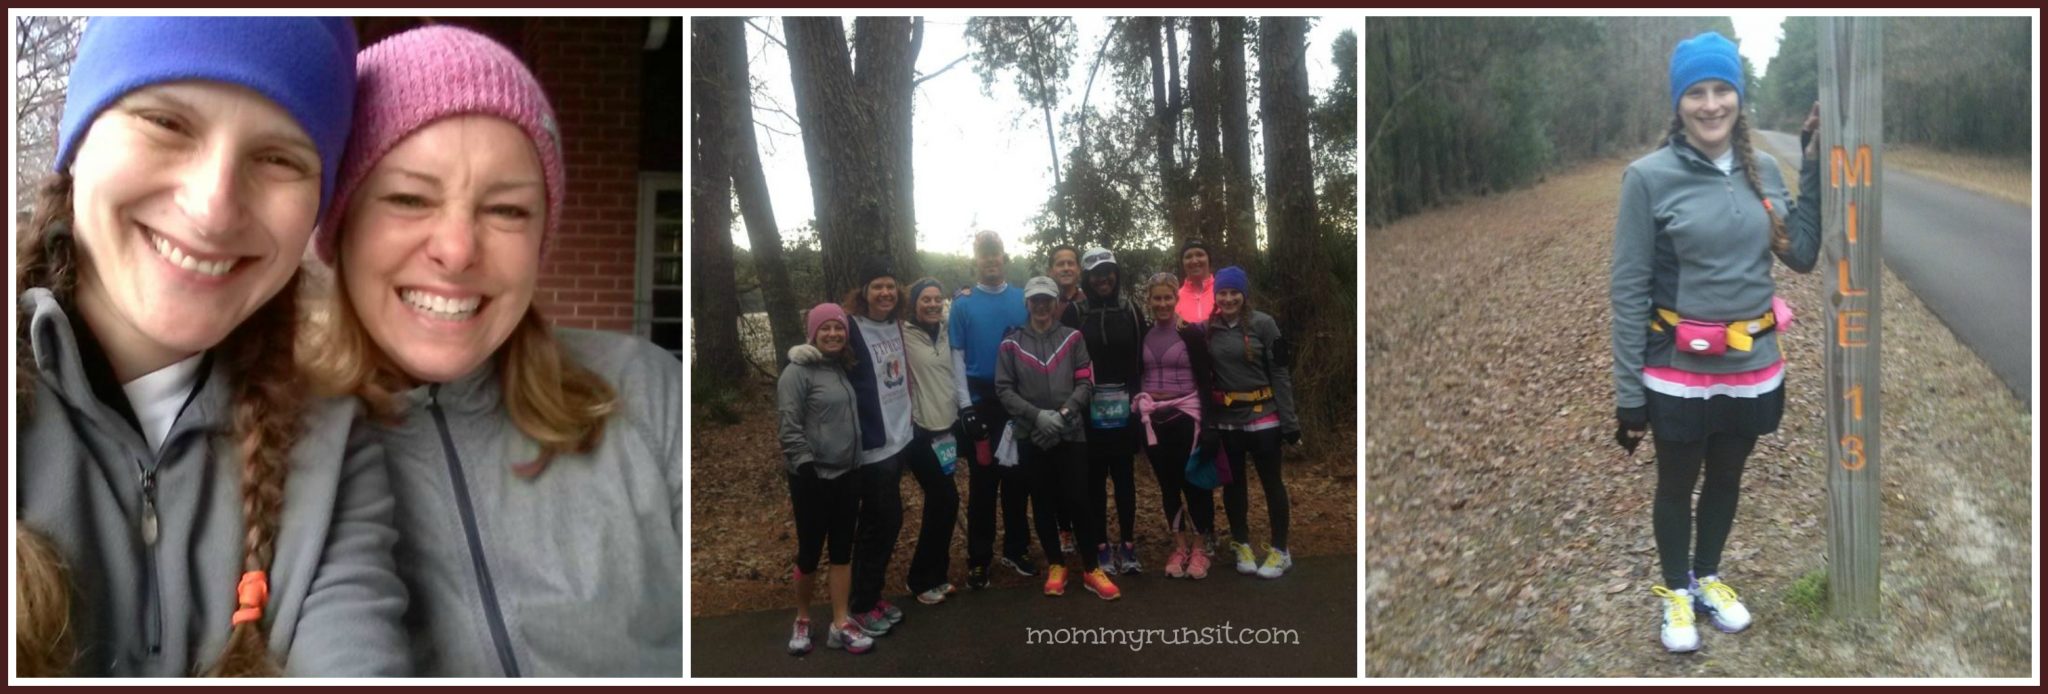 Galloway Training Program | Marathon, Training Run, or Both? | Mommy Runs It